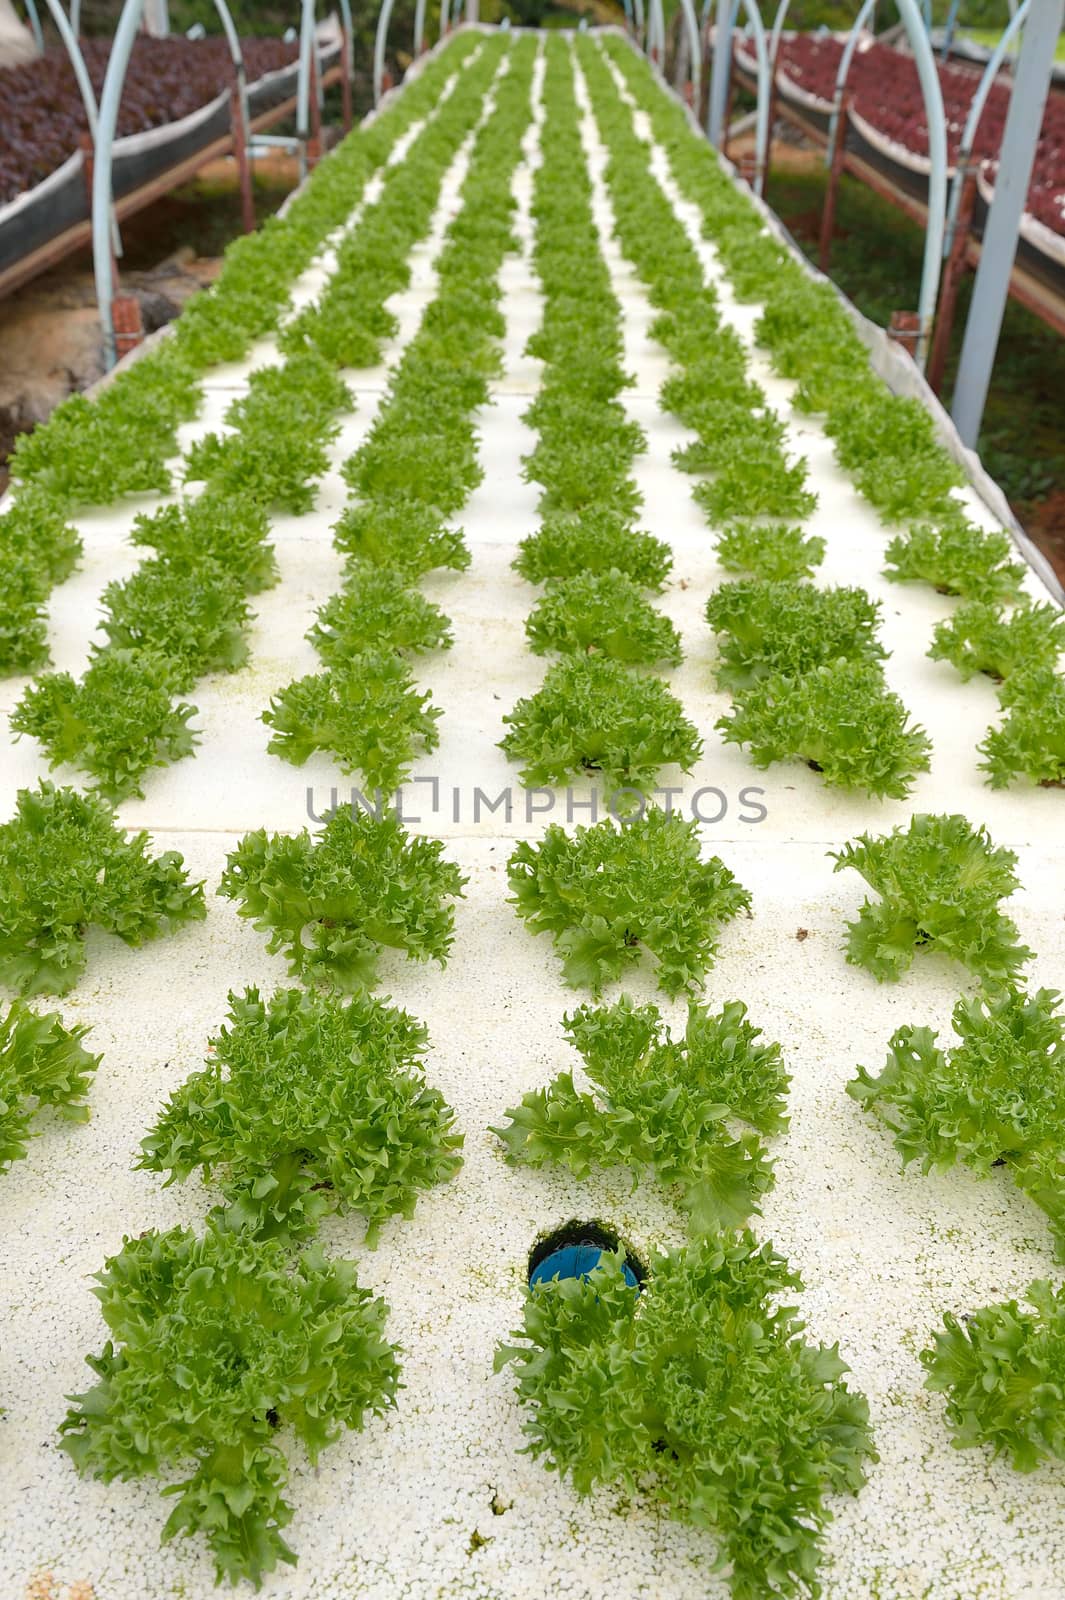 hydroponic farm at Doi Angkhang royal project, Chiangmai, Thailand.